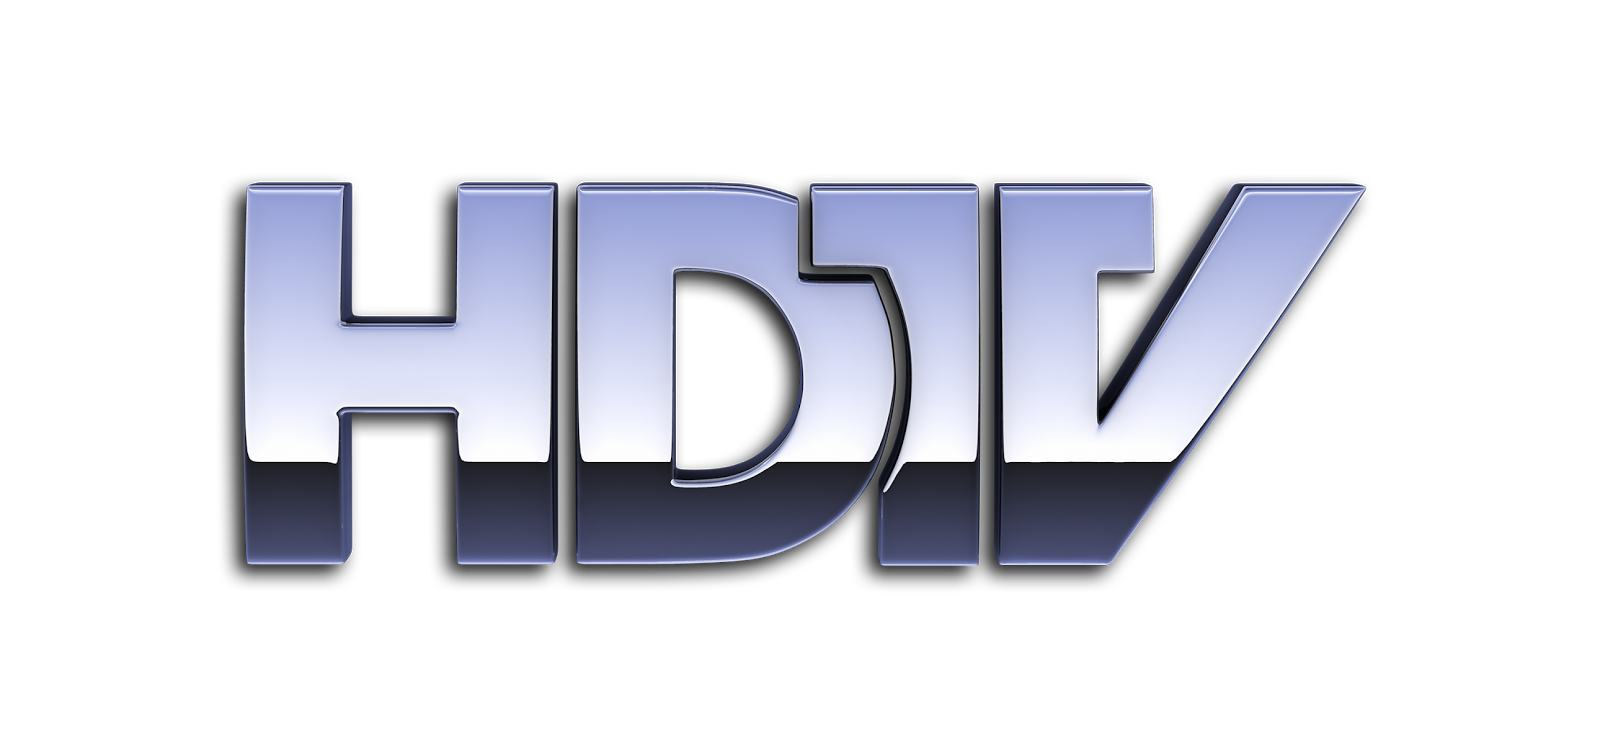 Sotwe tv. HDTV логотип. Телевидение надпись. Логотип Телеканал HDTV. ТВ каналы с надписями.